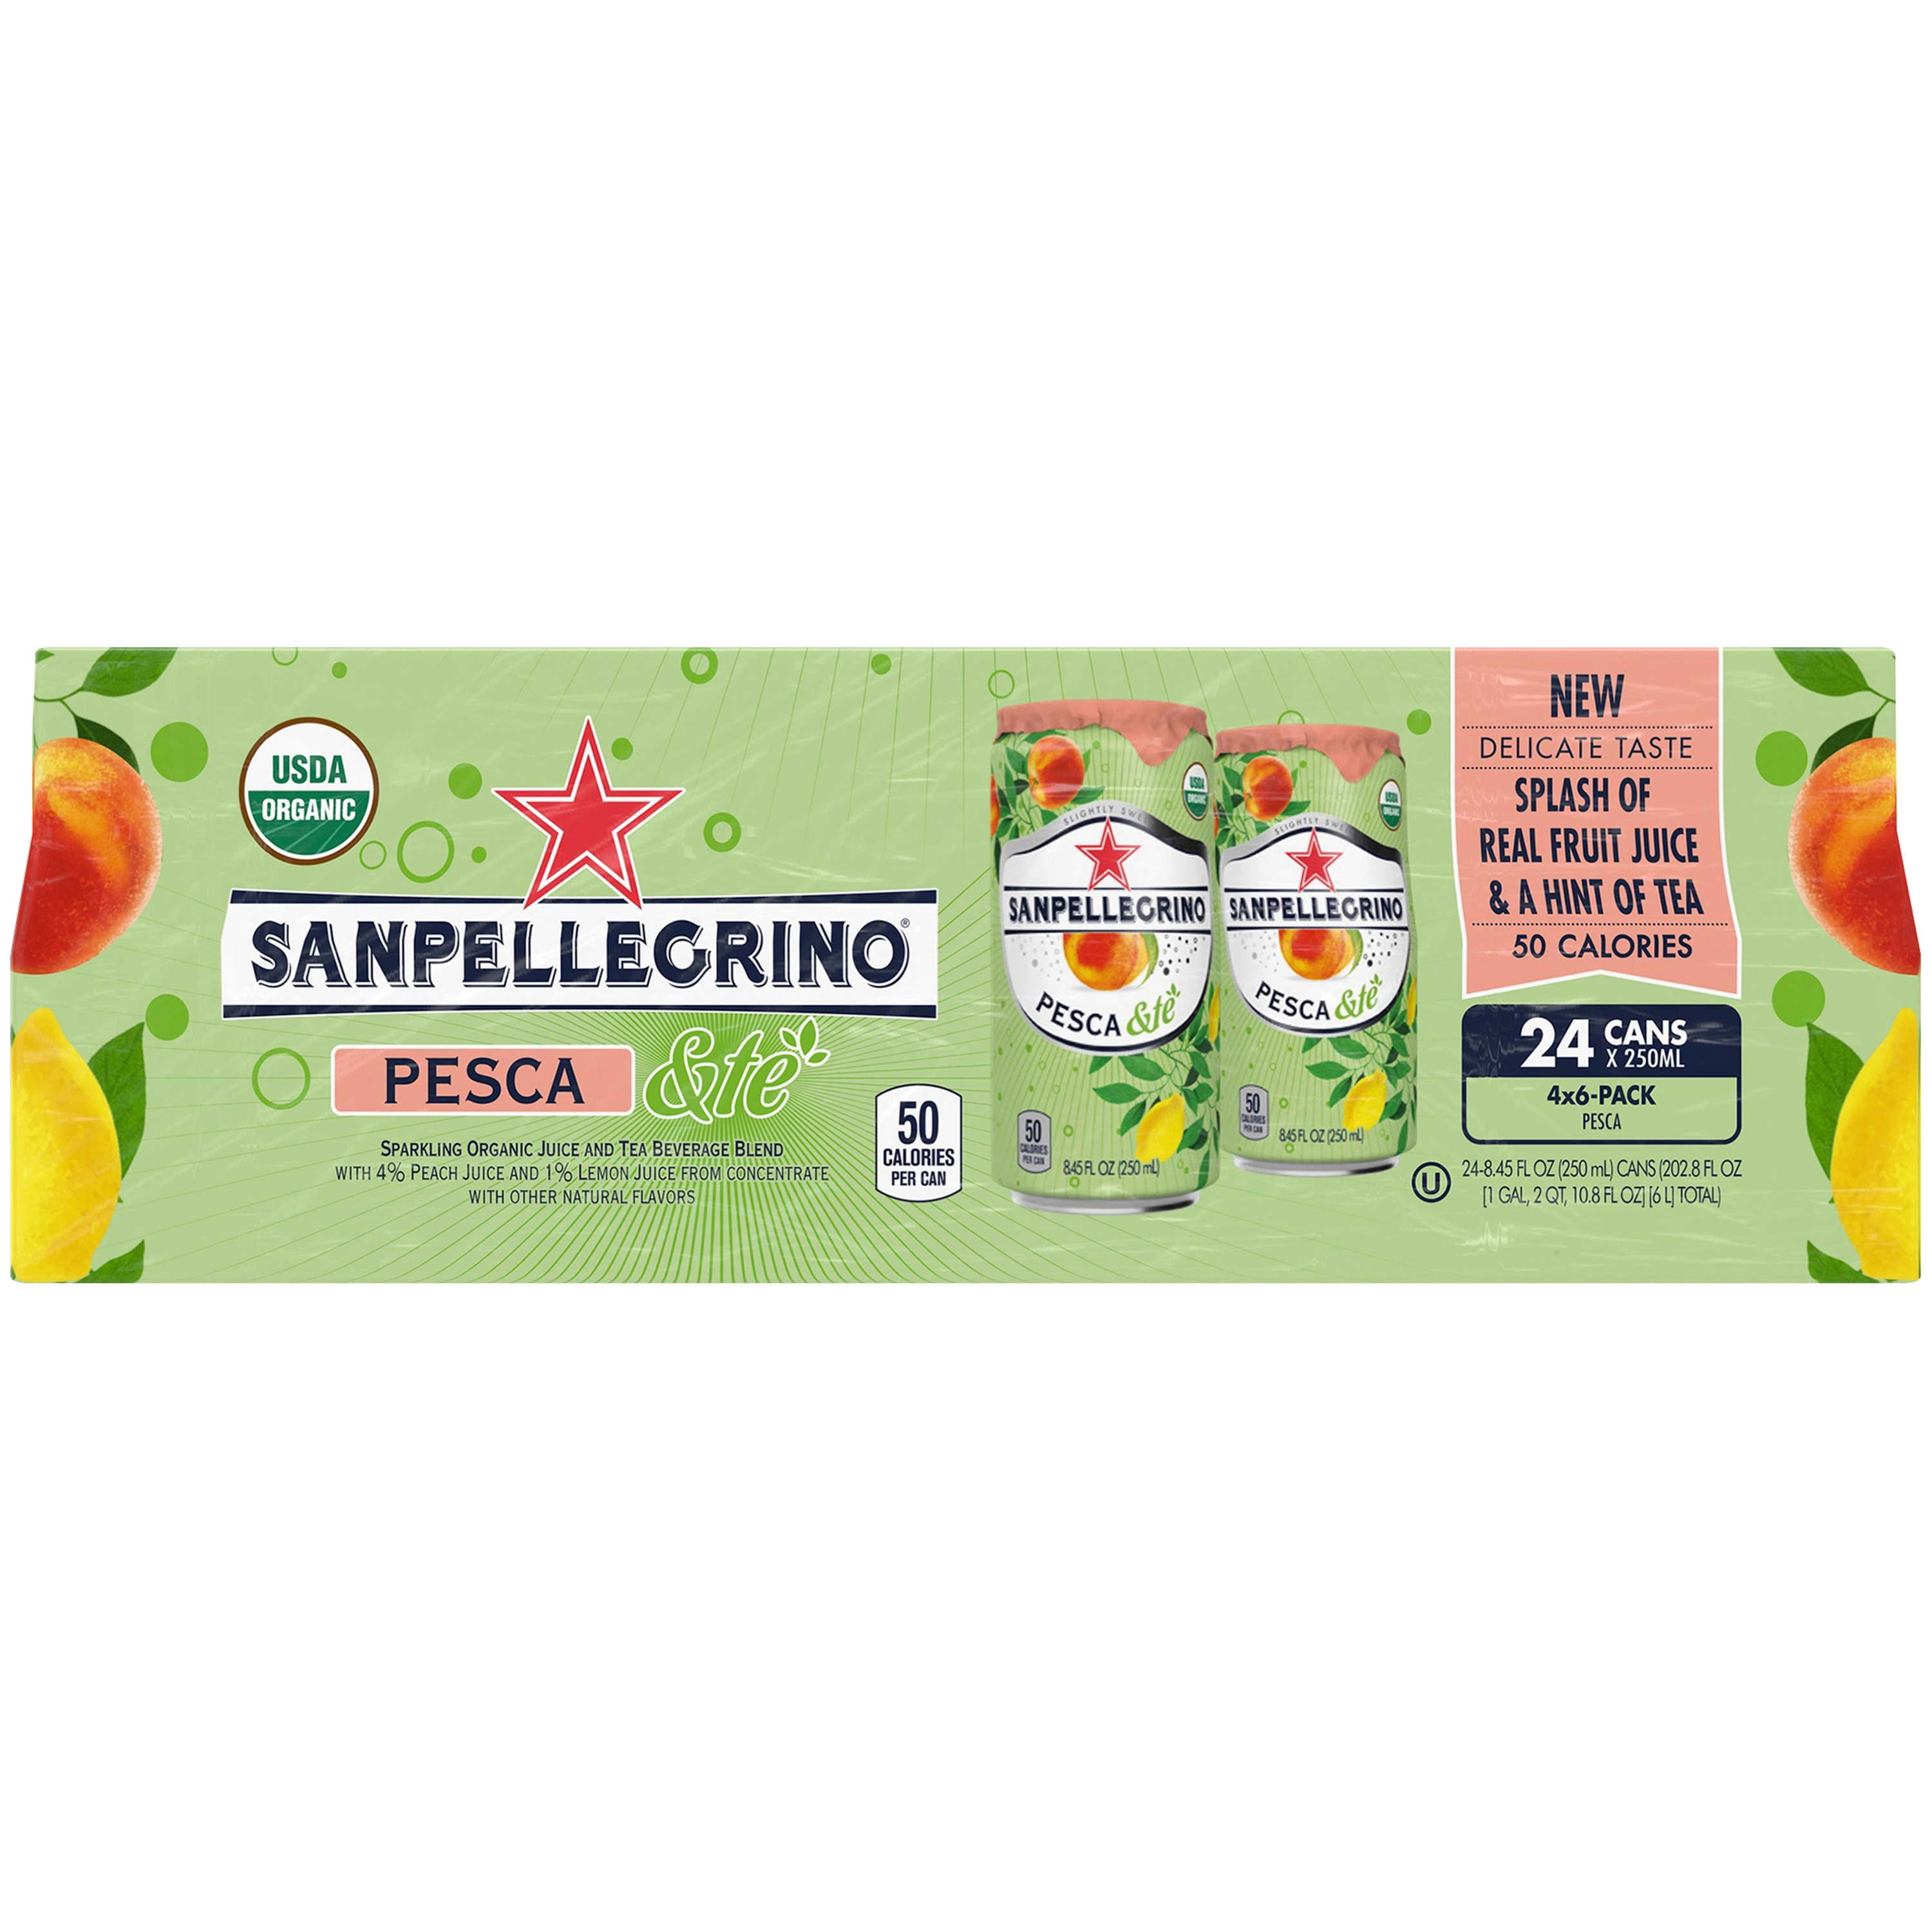 Sanpellegrino Pesca &Te Sparkling Organic Juice and Tea Pesca; Peach & Tea  Flavoured Water 202.8 fl oz.